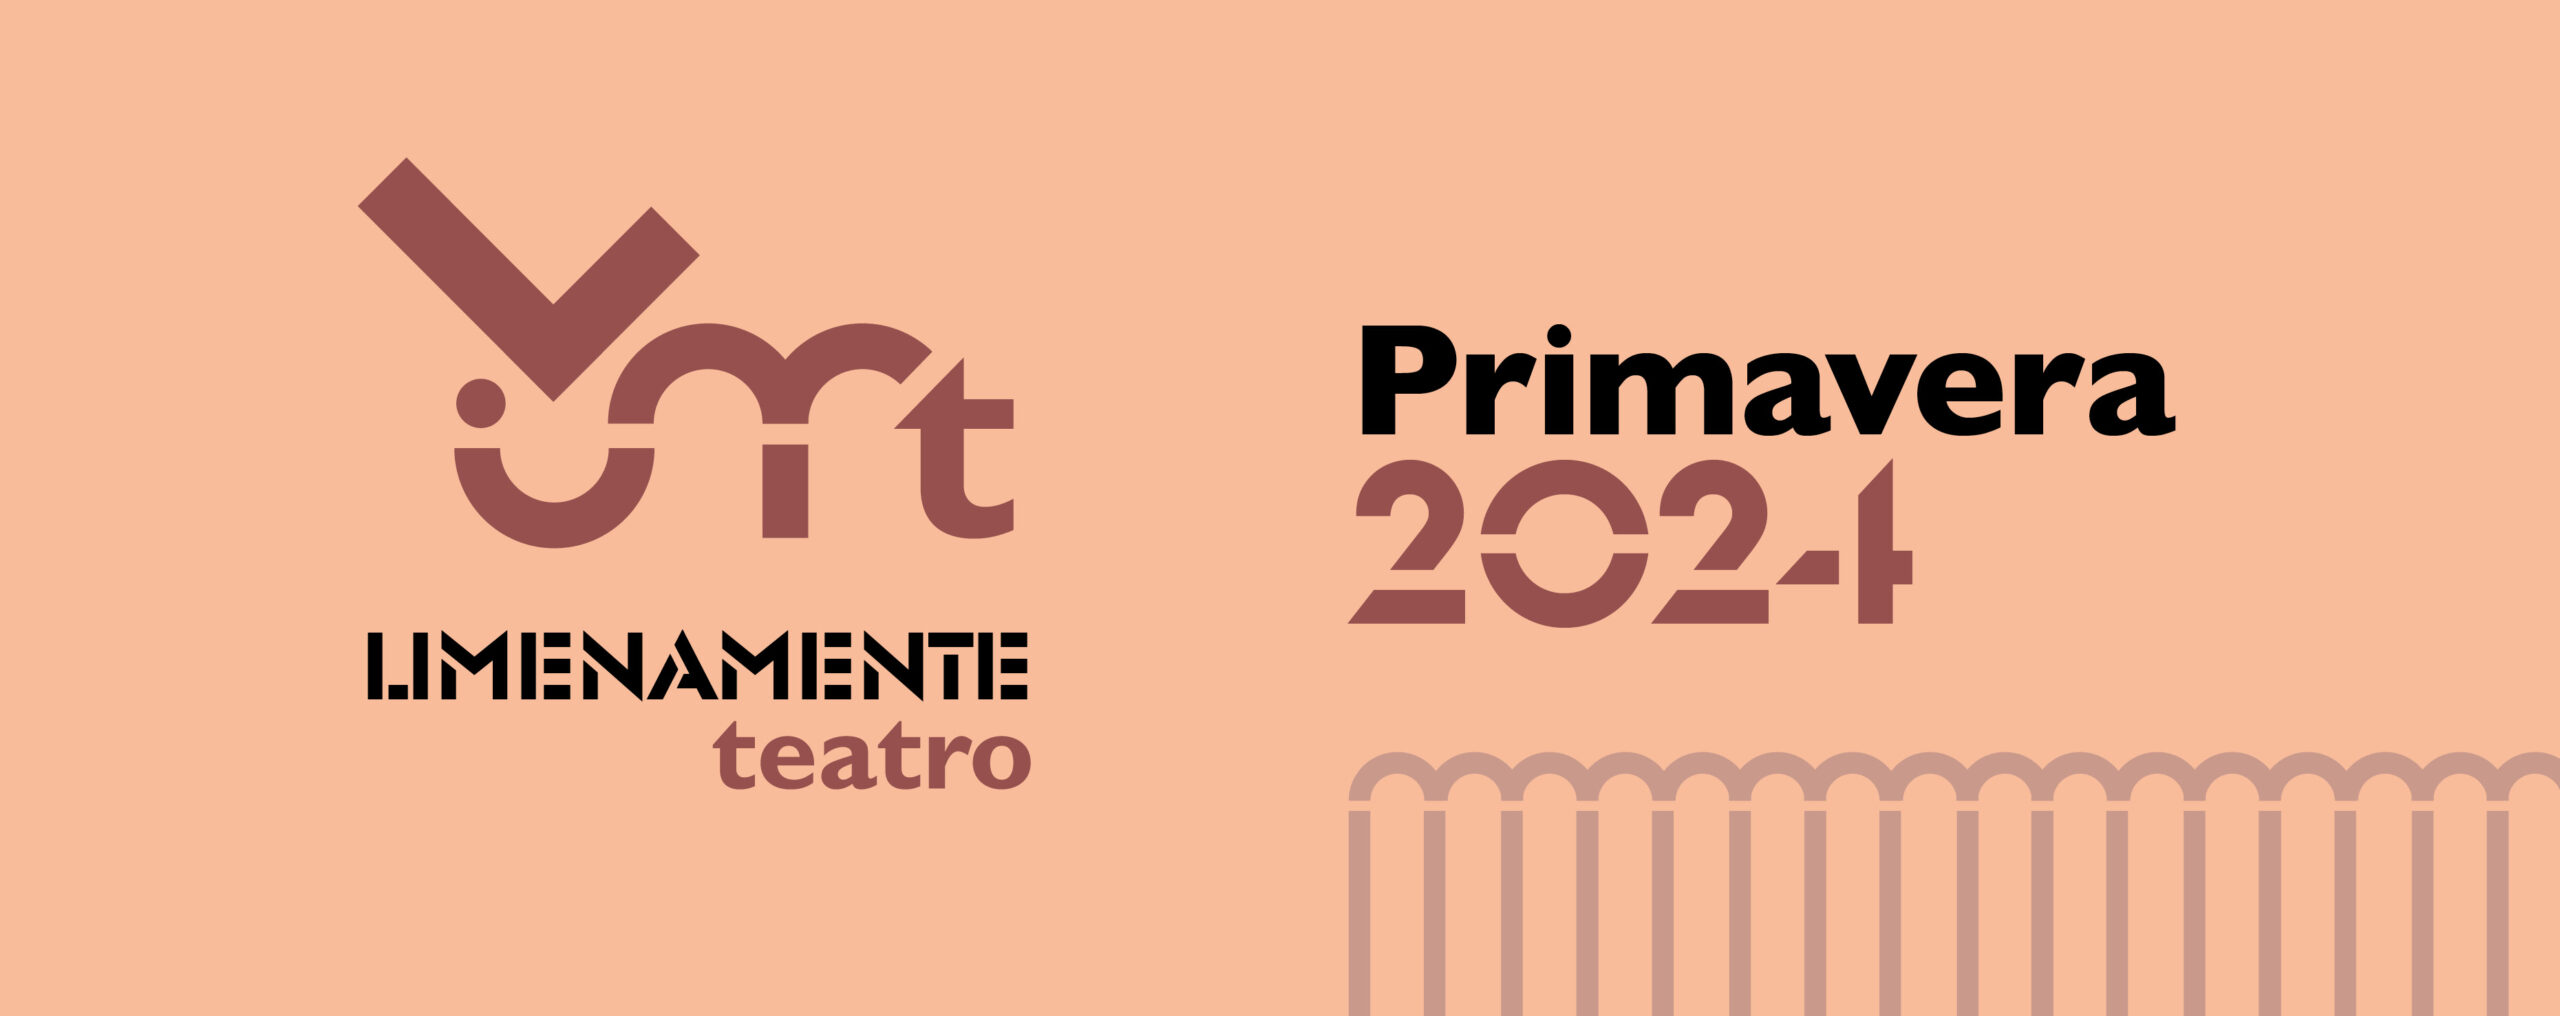 Limenamente Teatro Primavera 2024